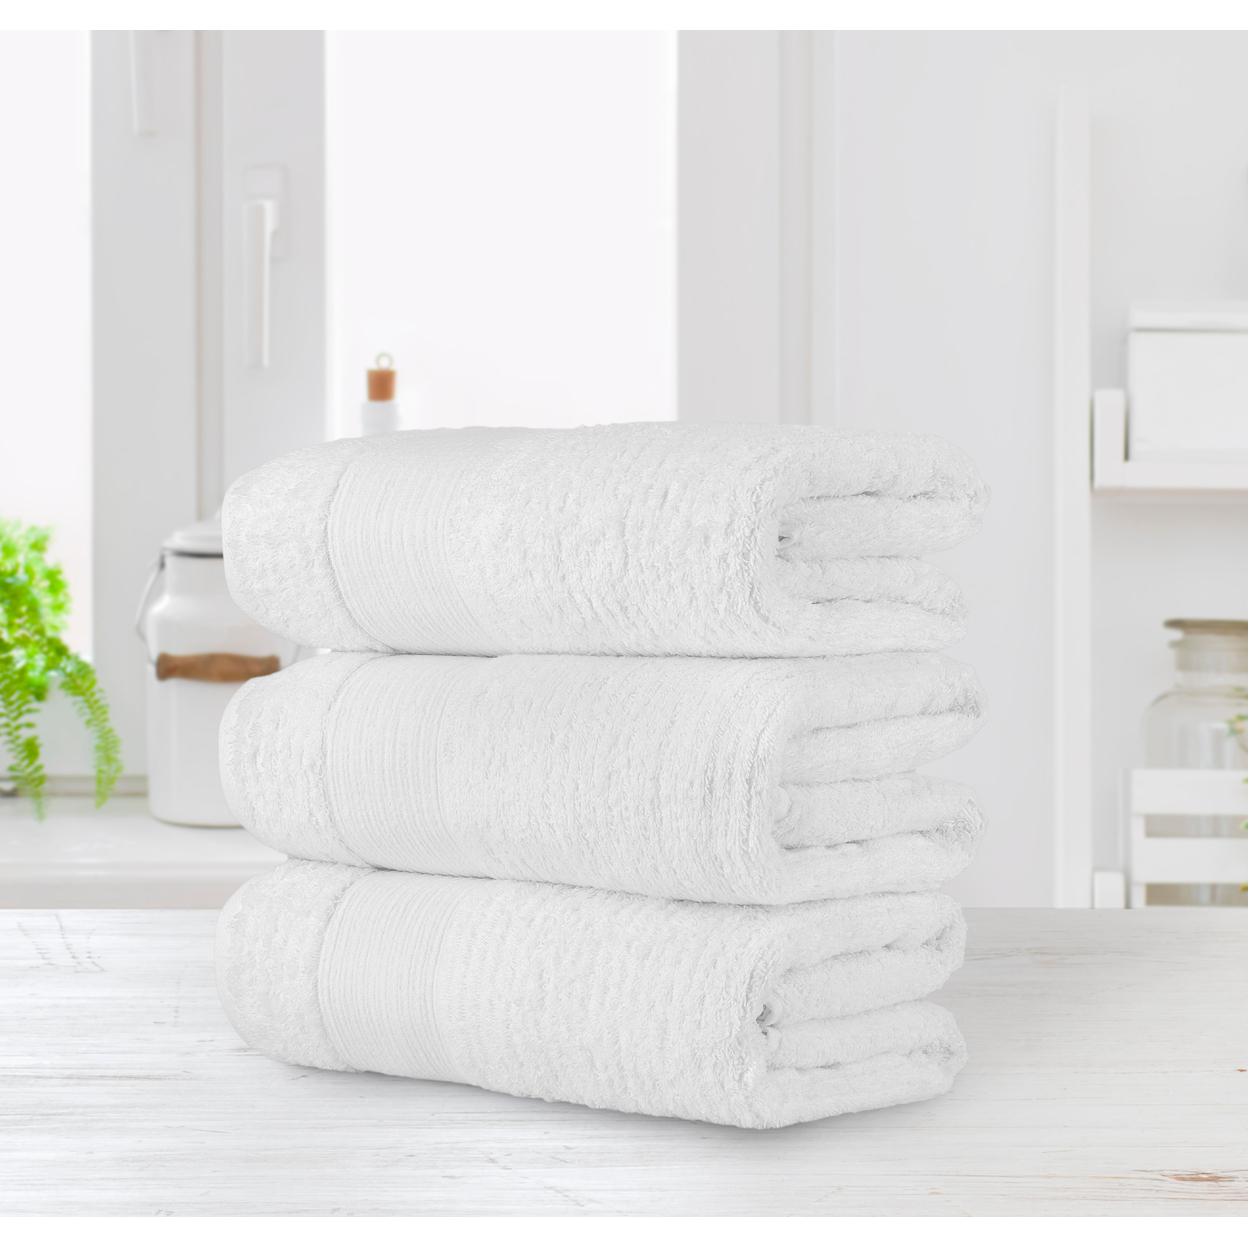 Chic Home Luxurious 3-Piece 100% Pure Turkish Cotton Bath Towels, 30 X 60, Jacquard Weave Design, OEKO-TEX Certified Set - White